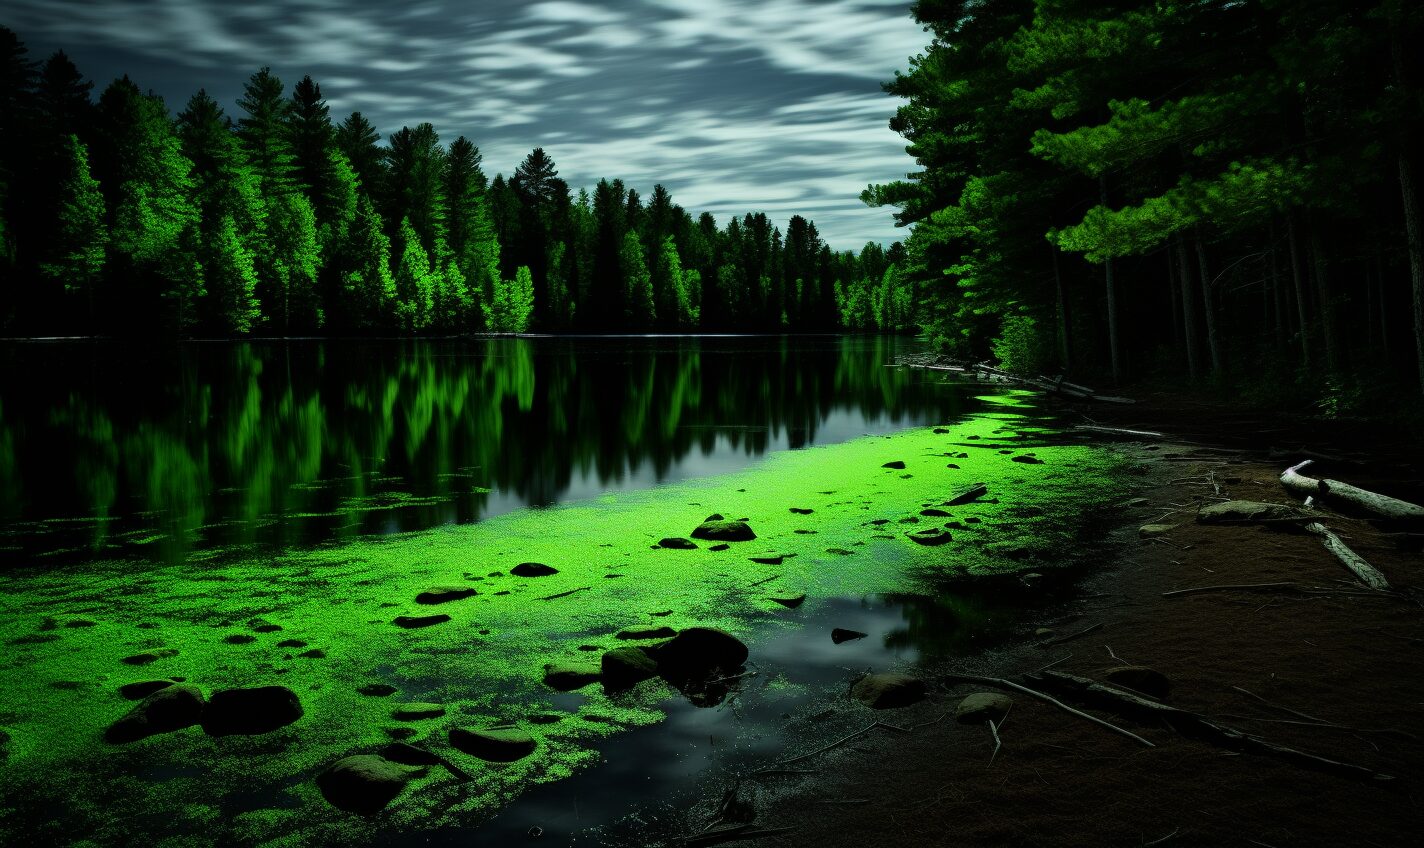 grand rapids, michigan in black and neon green glow